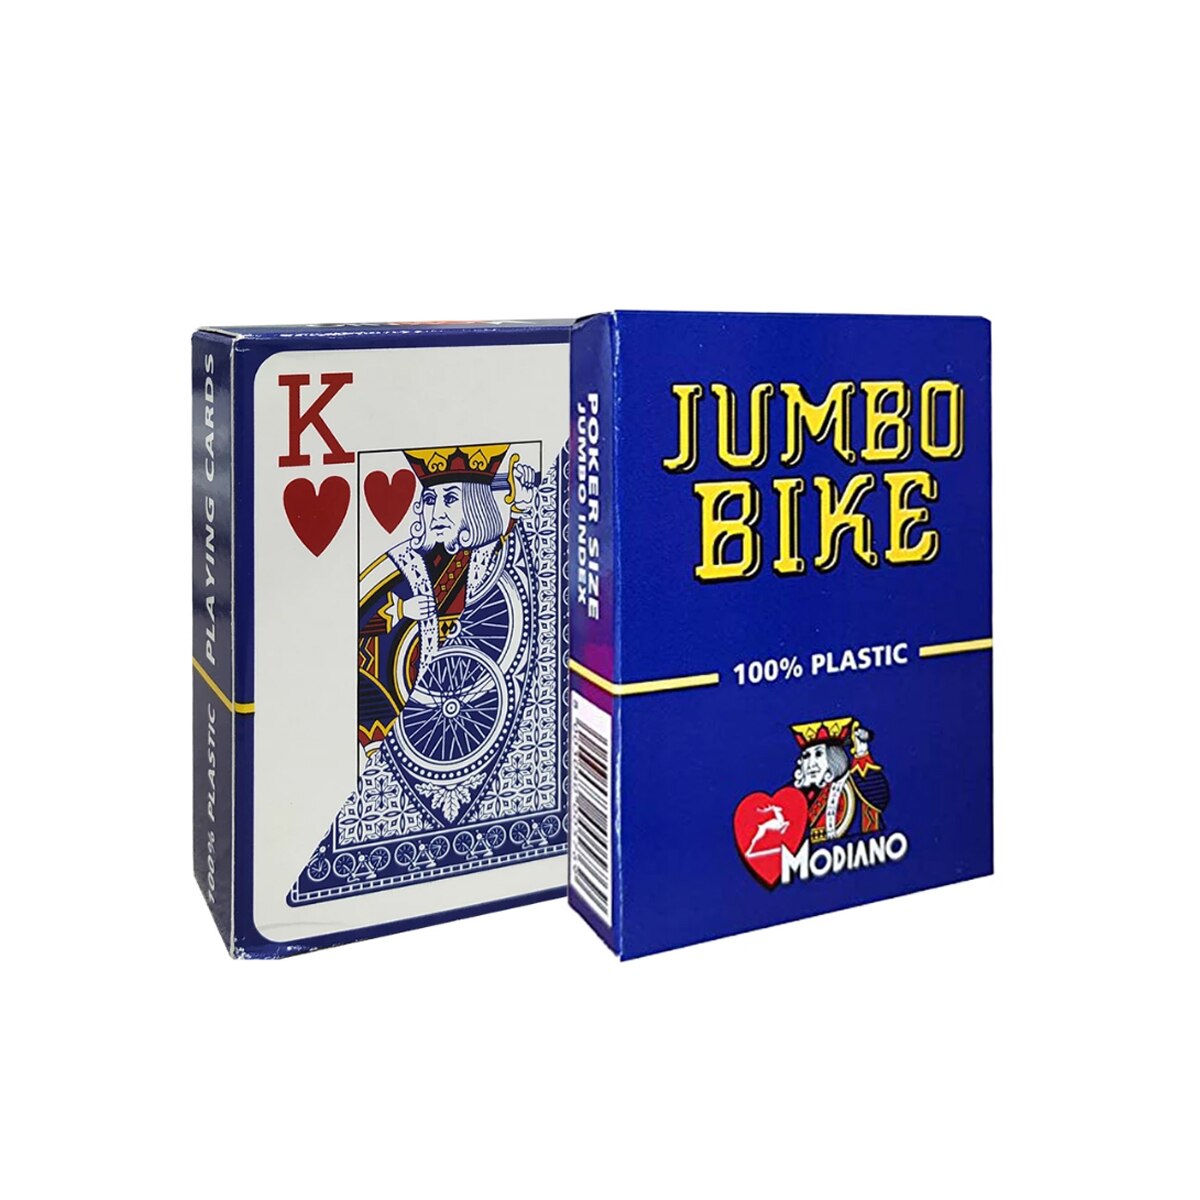 blue Modiano Bike Trophy cards